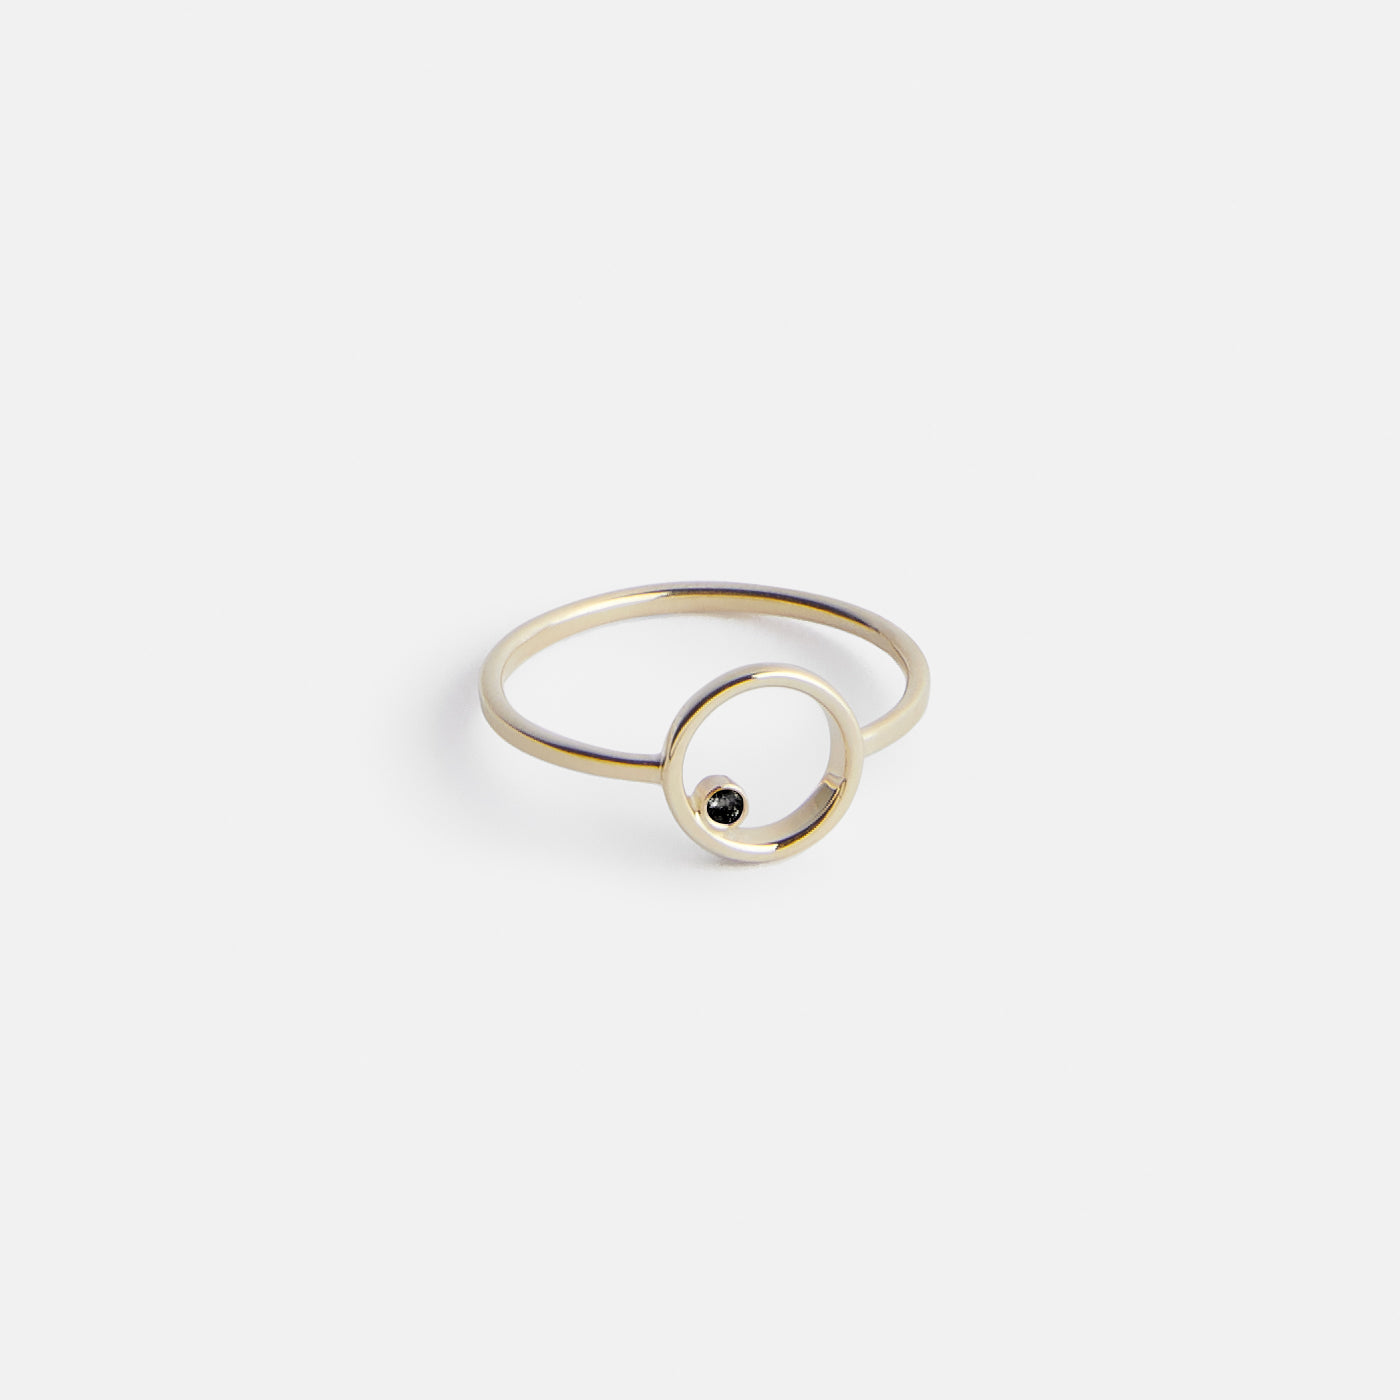 Ila Alternative Ring in 14k Gold set with Black Diamond by SHW Fine Jewelry New York City